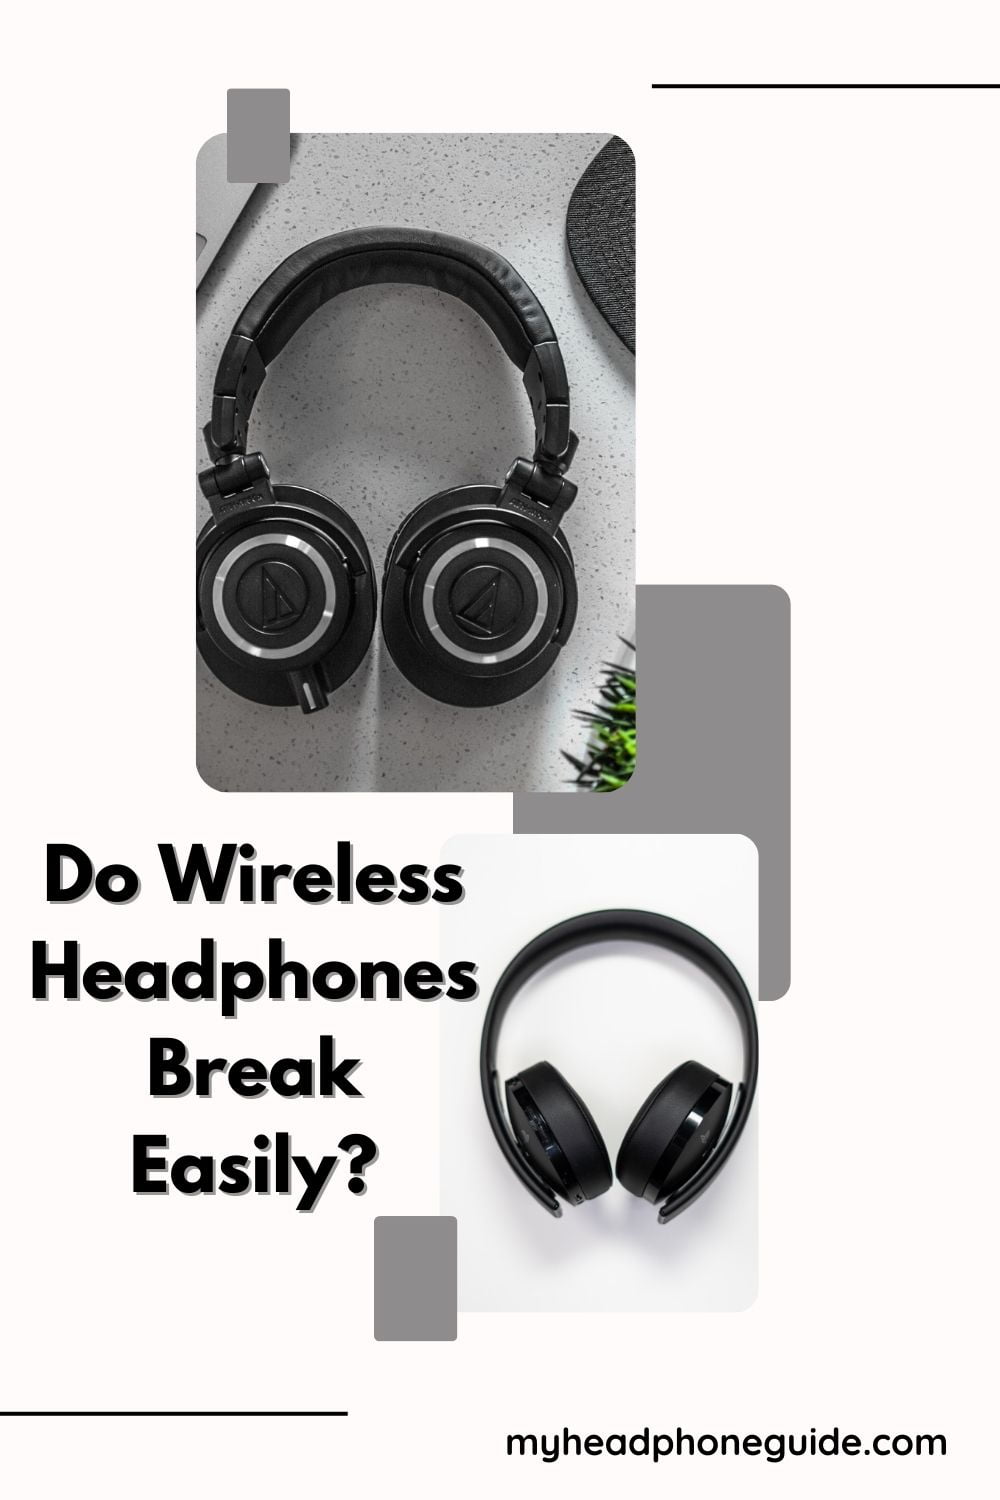 Do Wireless Headphones Break Easily?